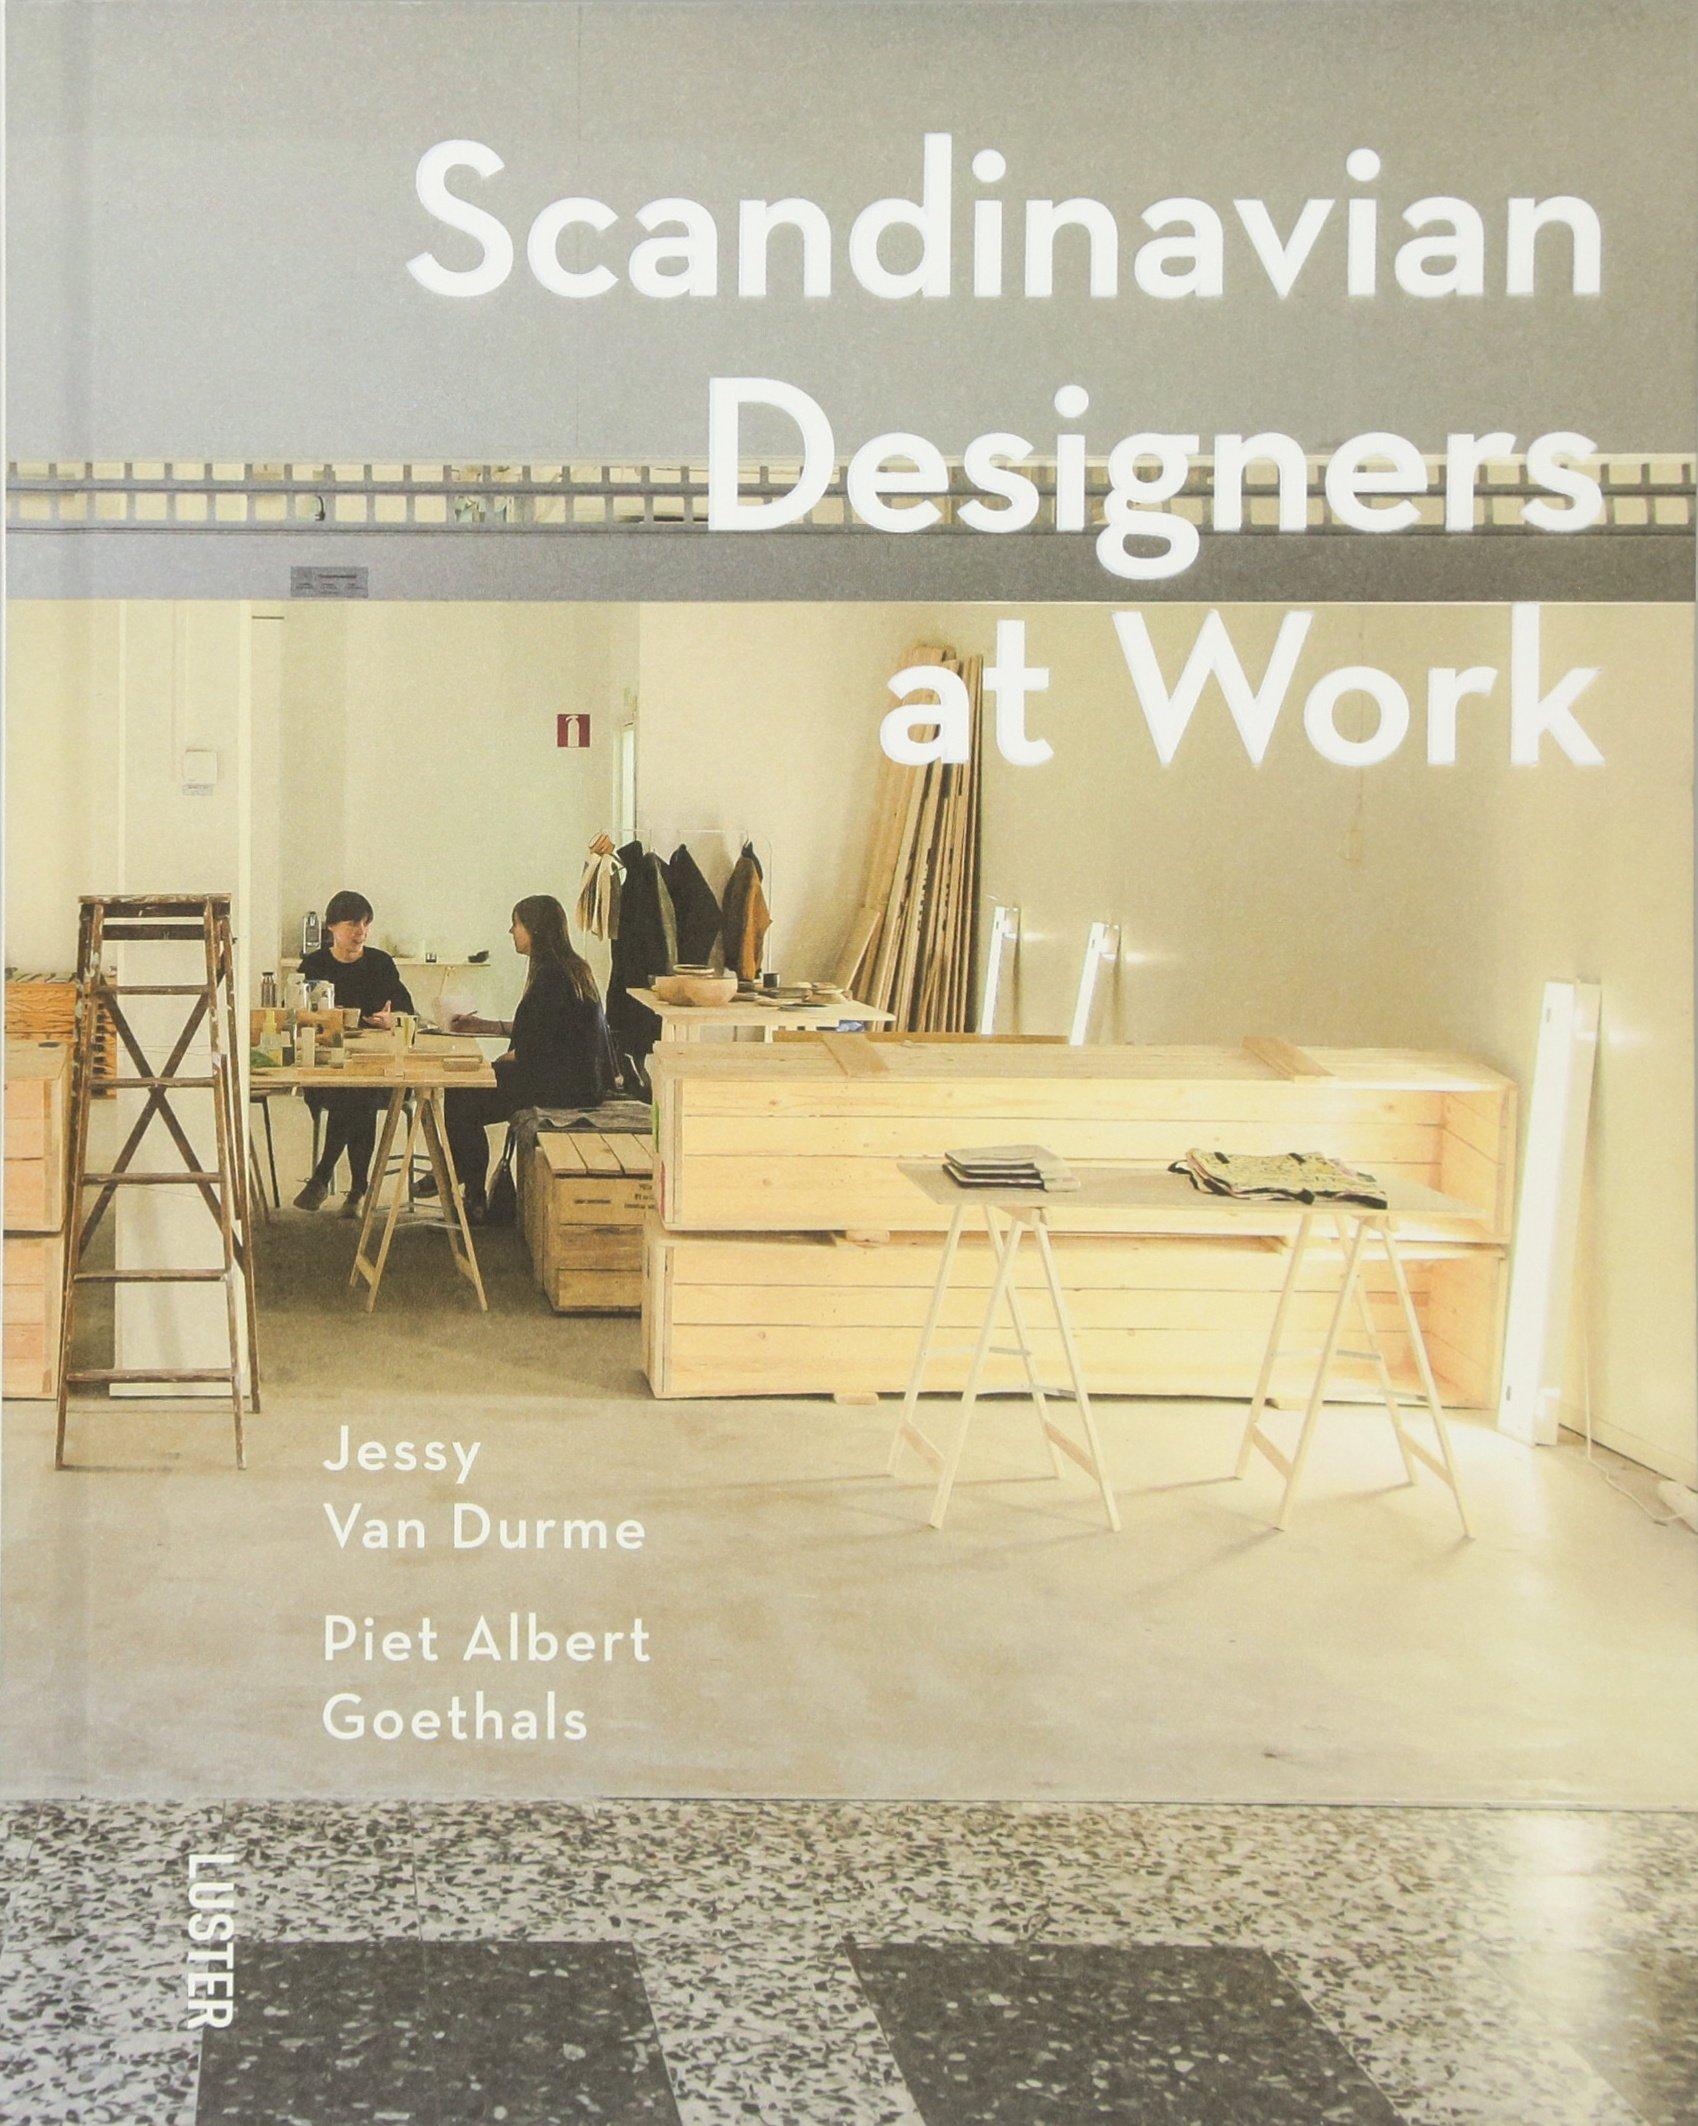 Scandinavian Designers at Work